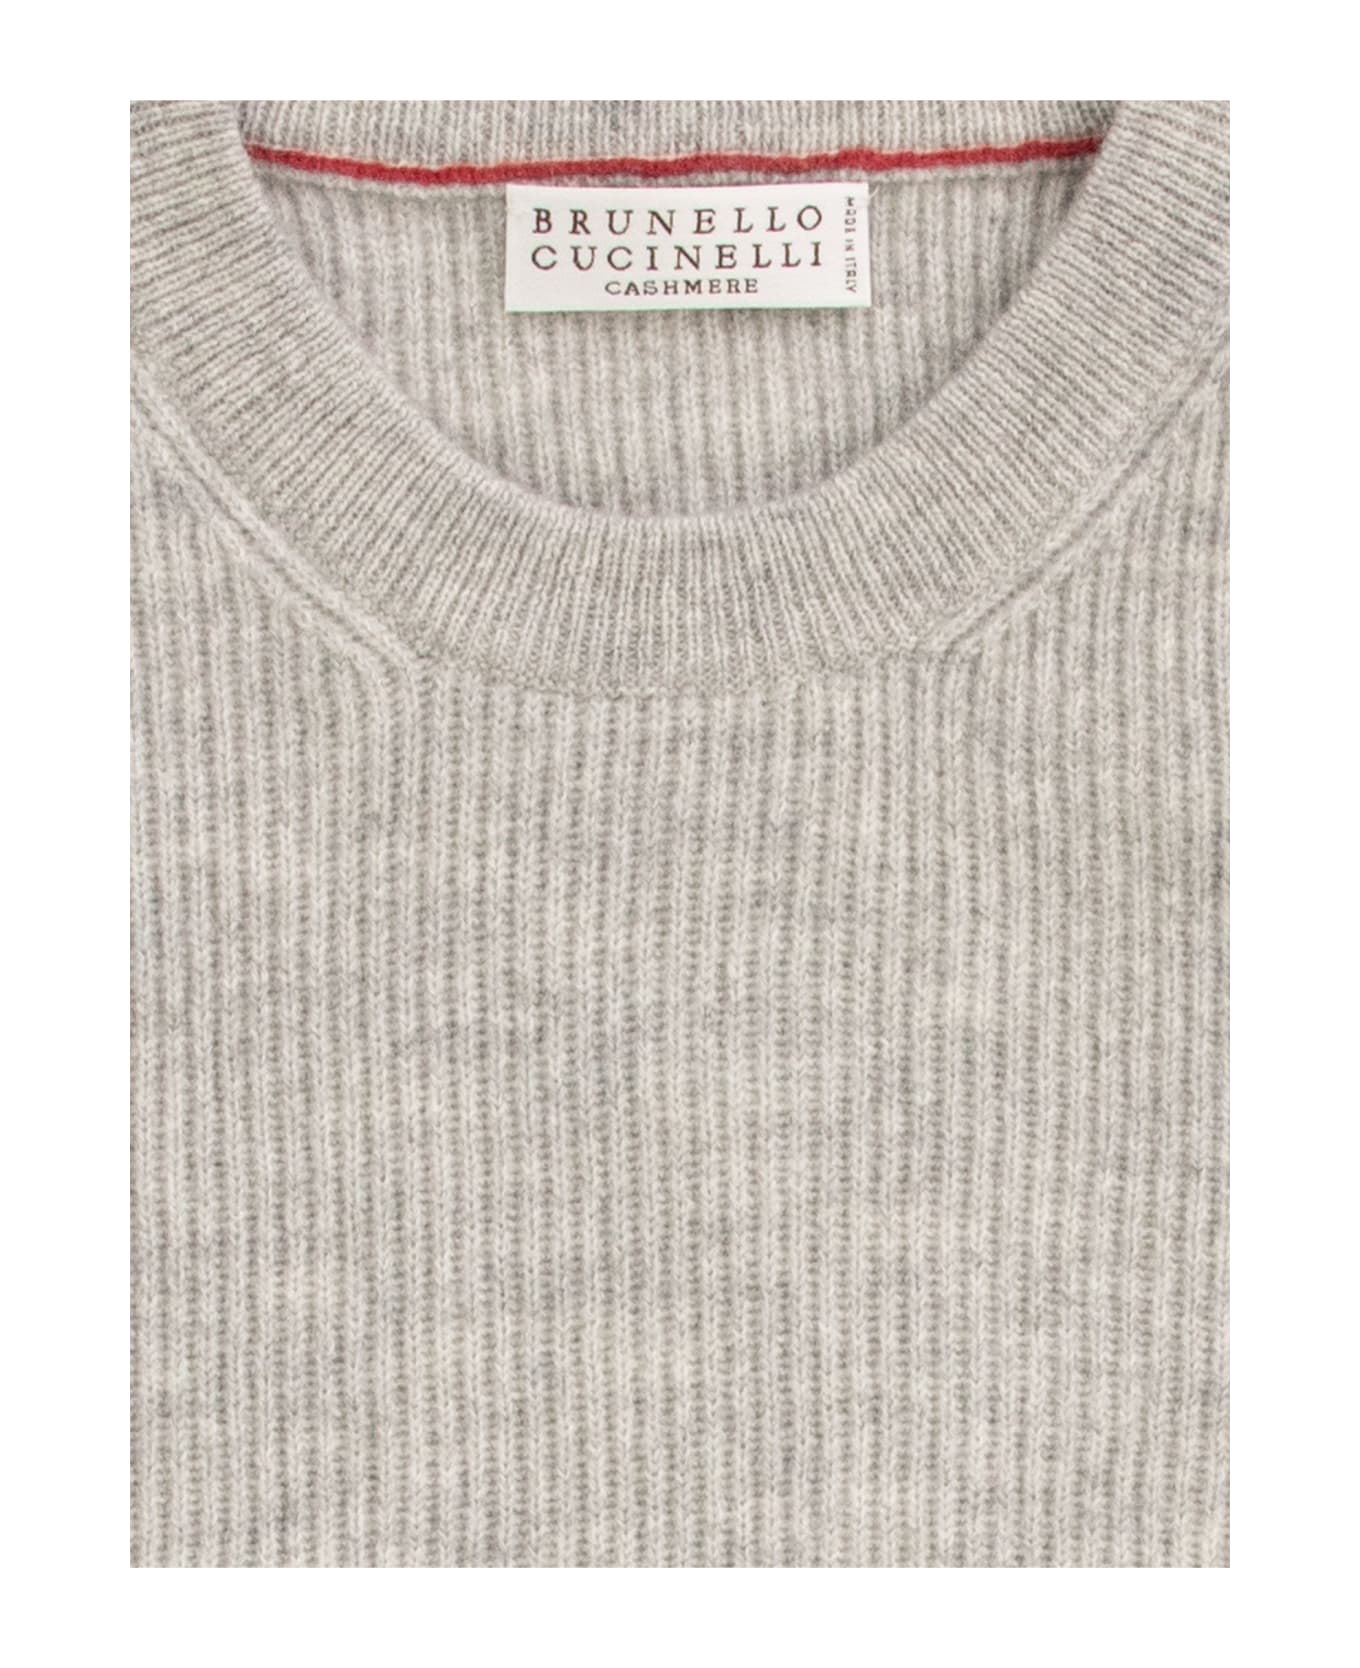 Brunello Cucinelli Cashmere Knitwear - Light Grey